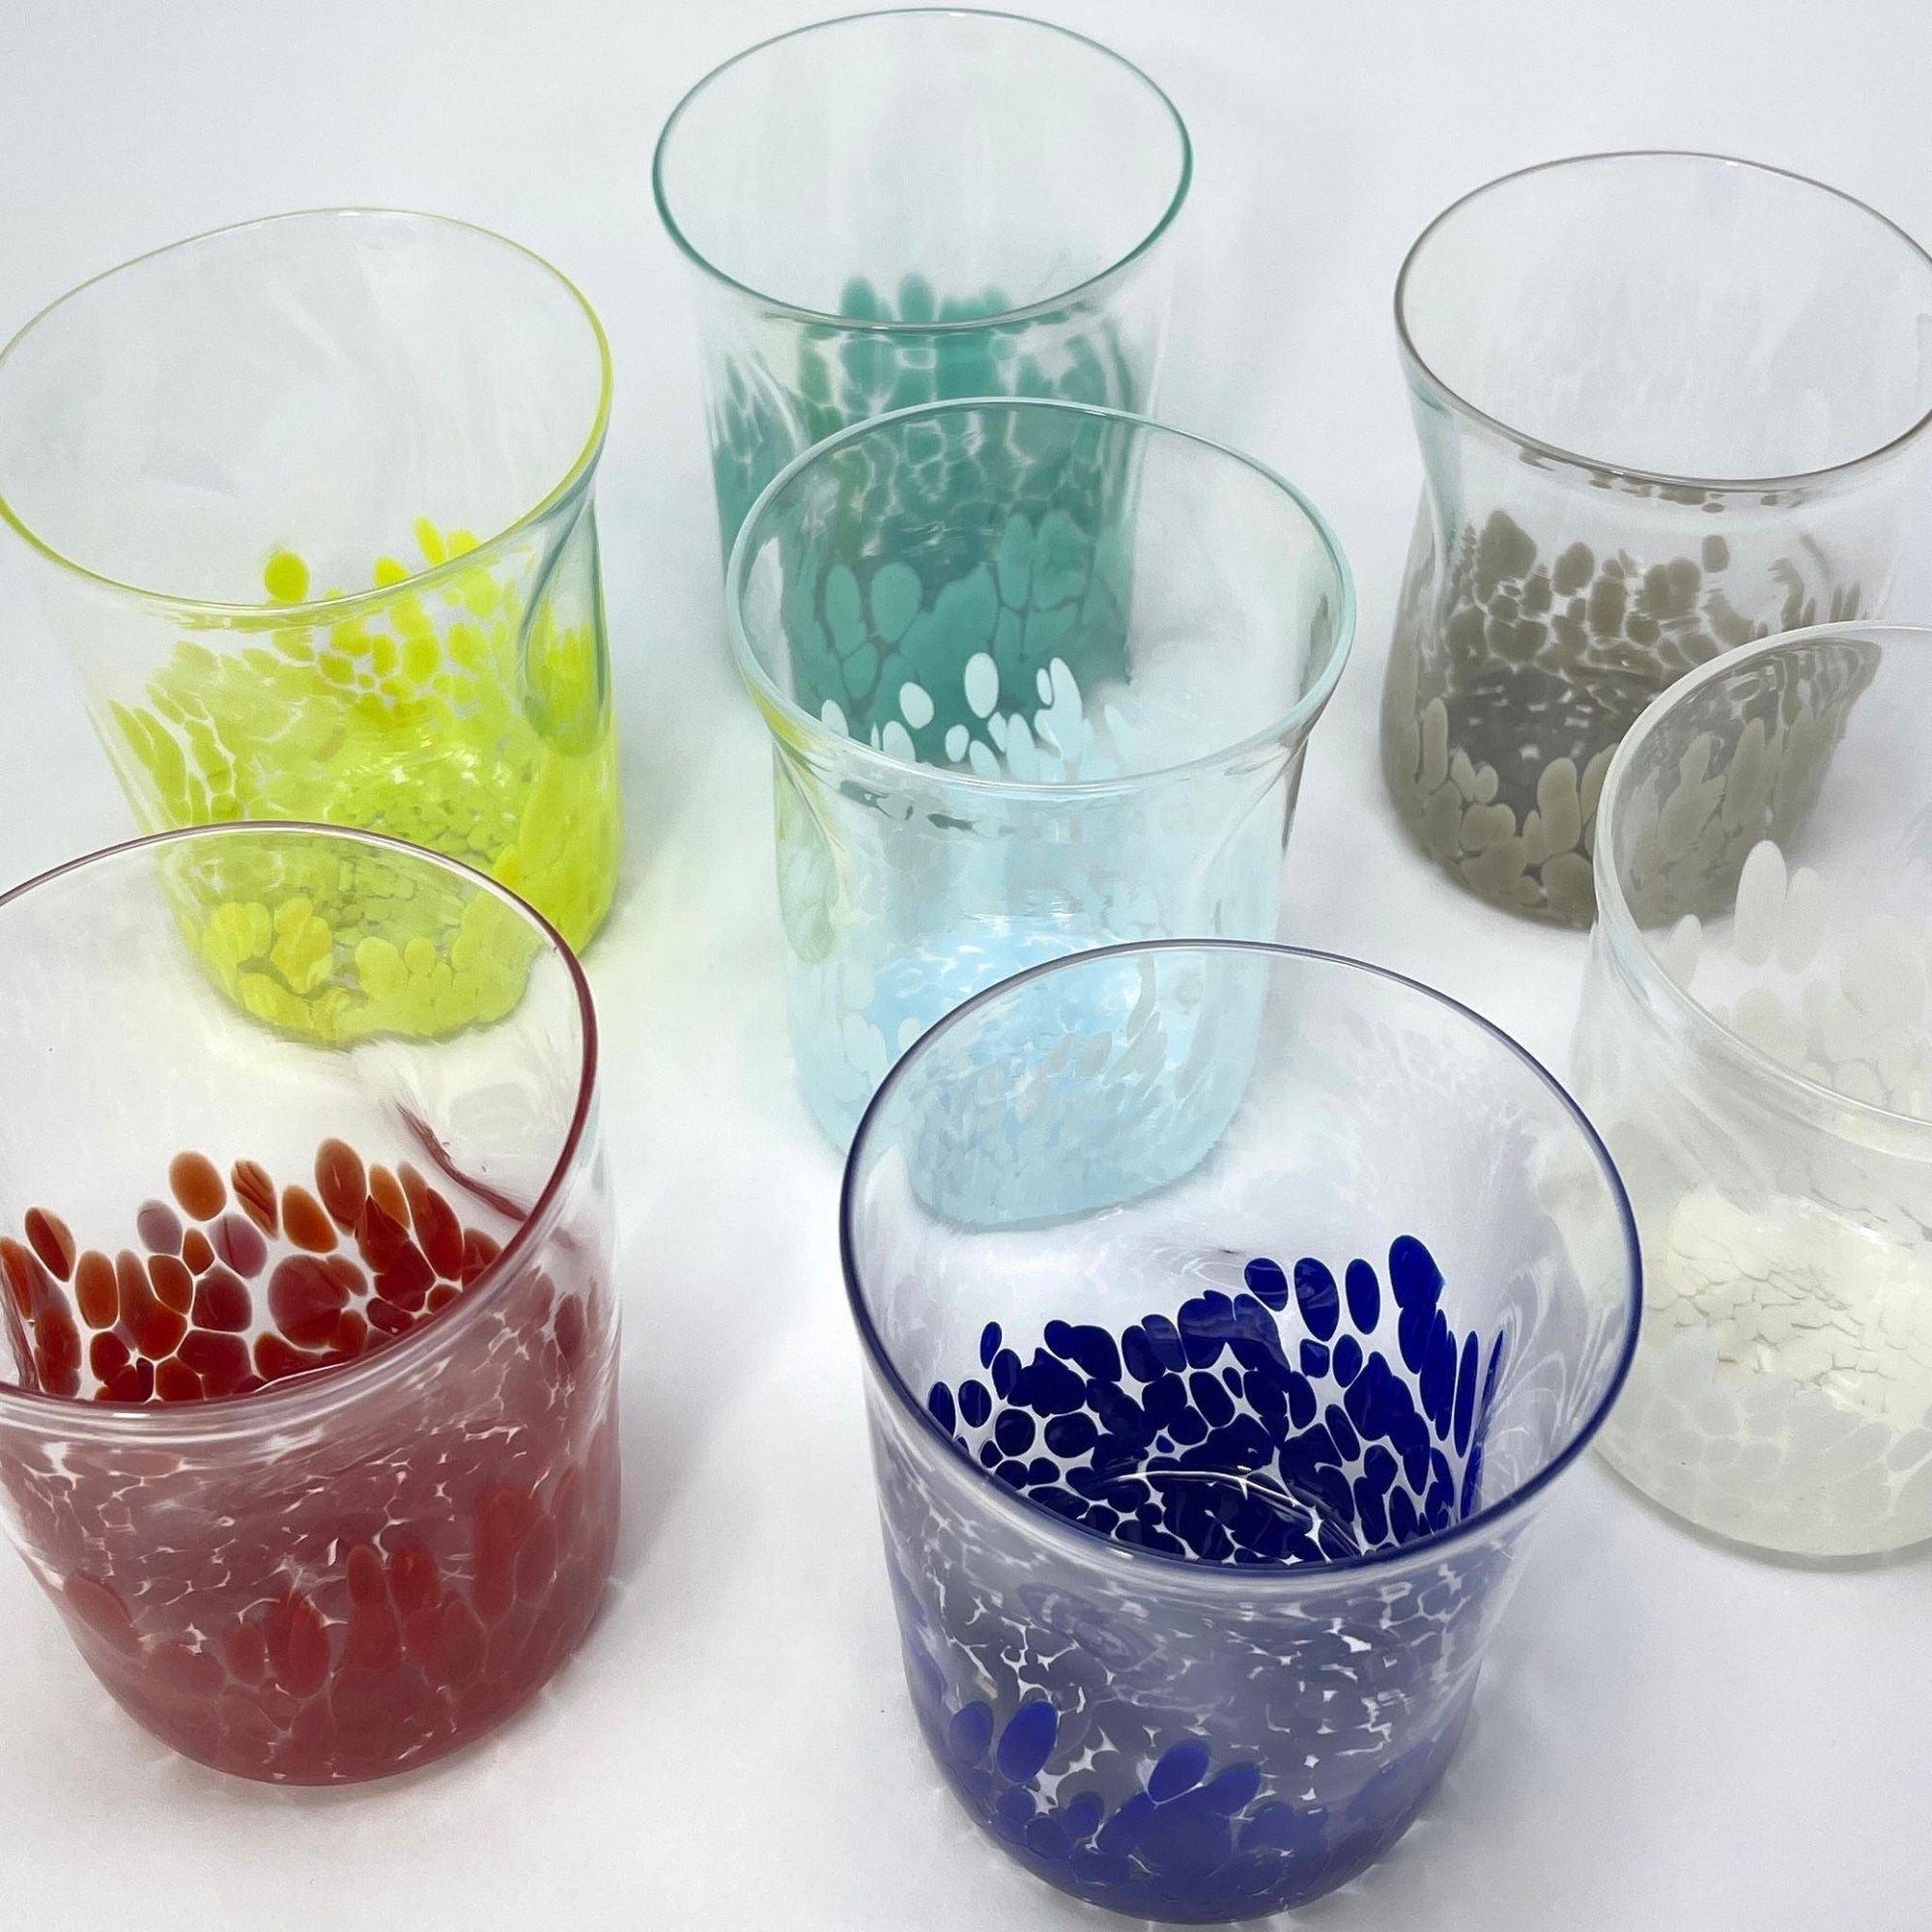 Allegra Murano Glass Short Drinking Glasses, Set of 2 at MyItalianDecor